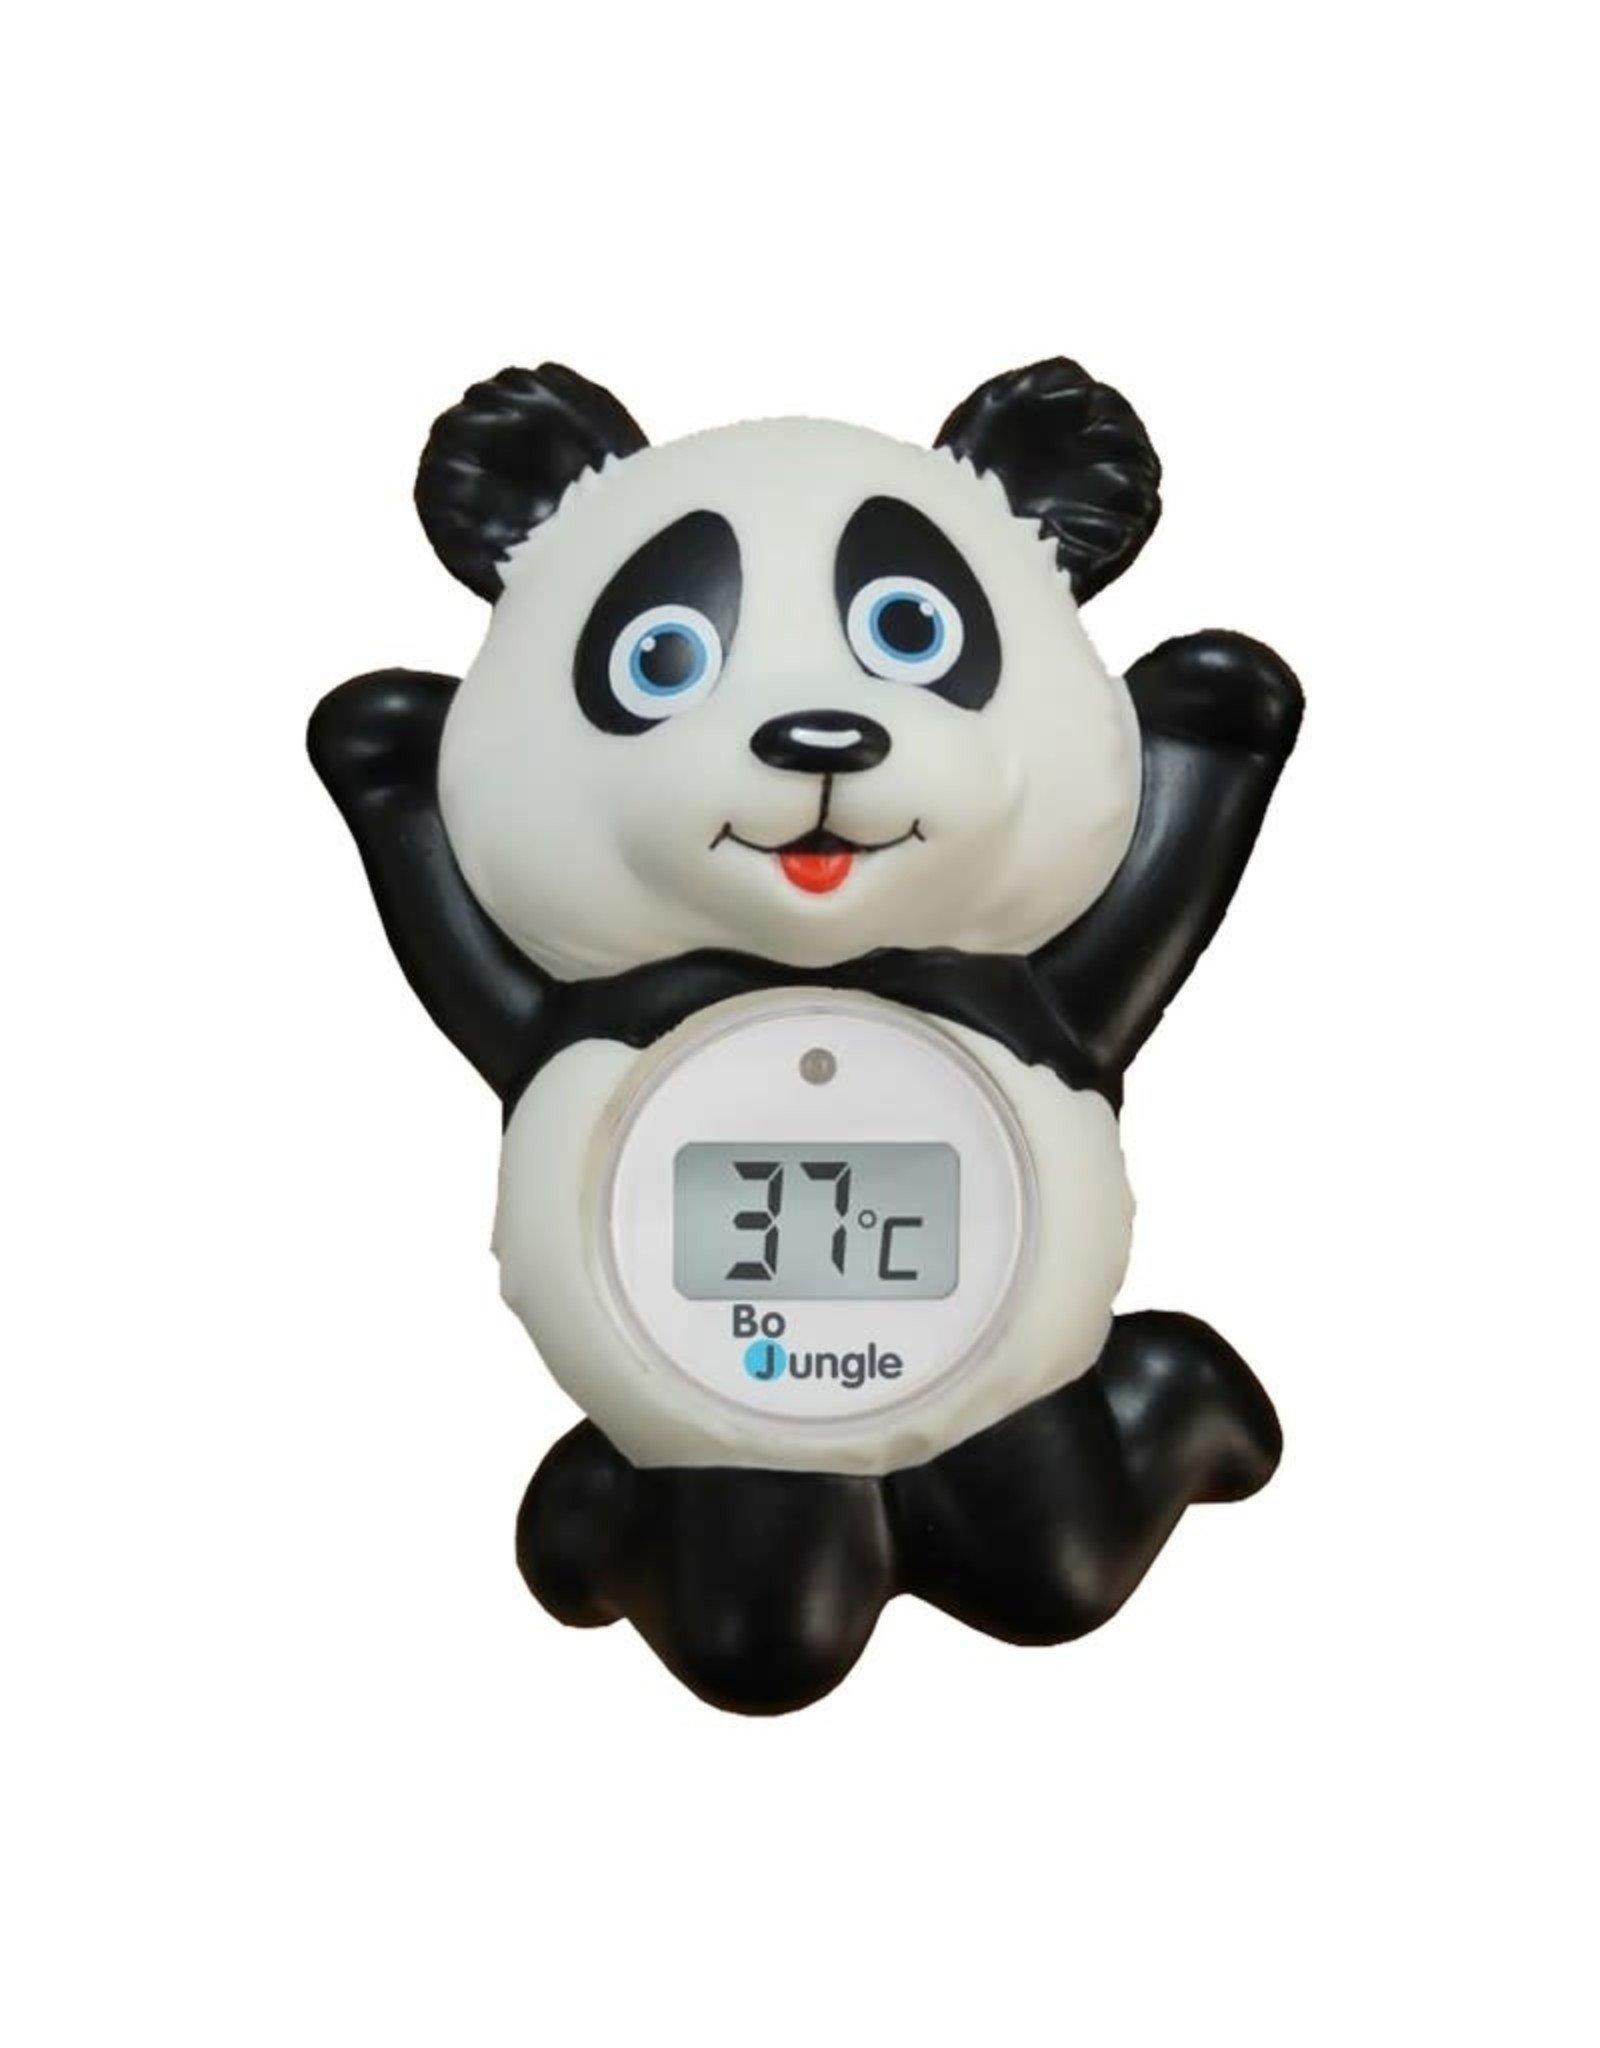 Bo Jungle Bo Jungle - Digital Baththermometer - Panda